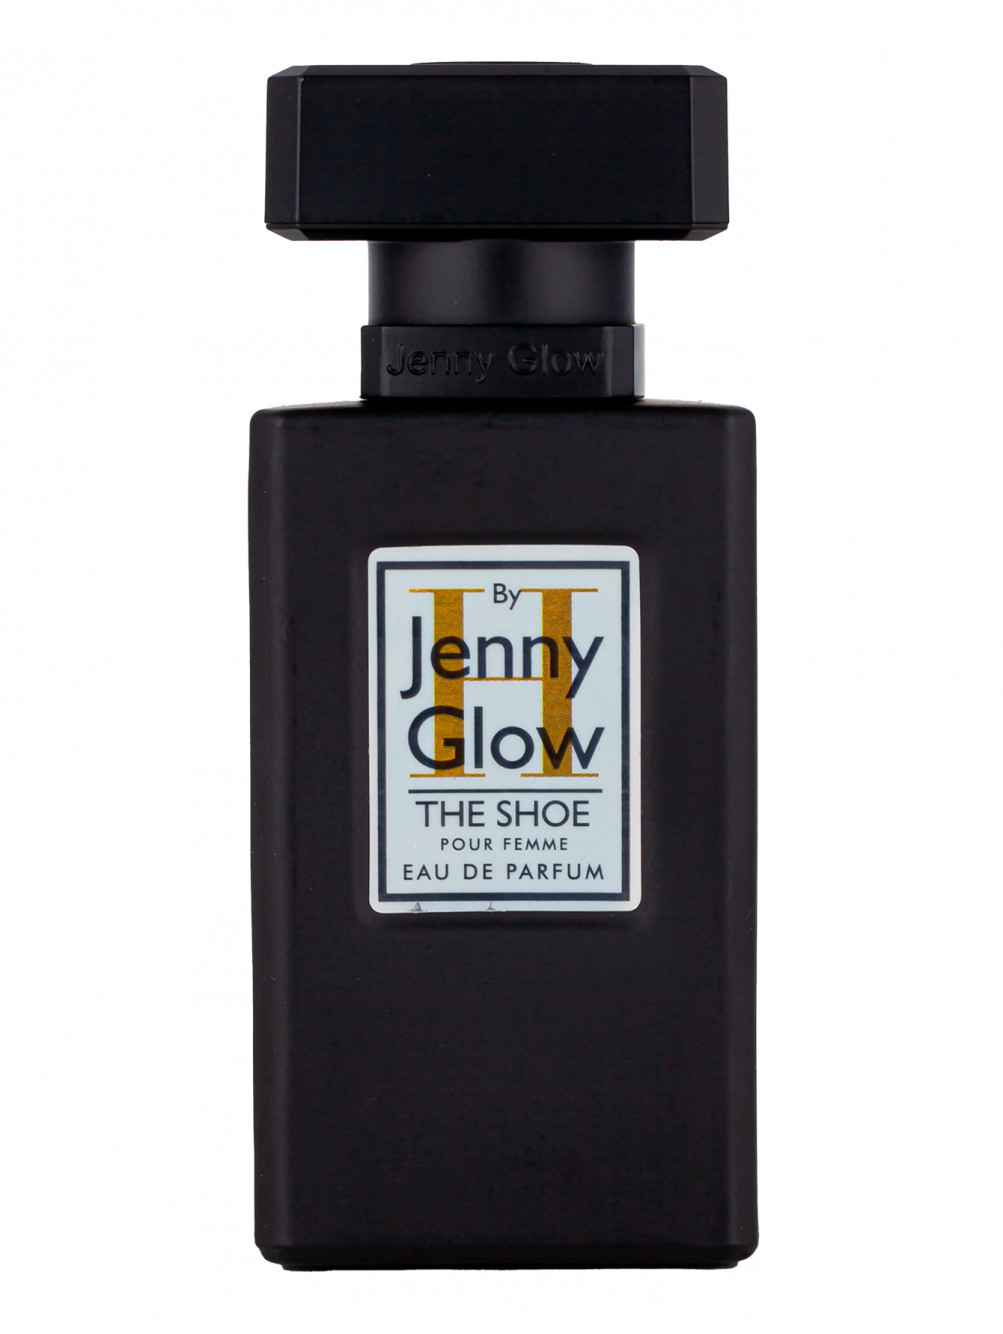 Парфюмерная вода Jenny Glow The Shoe Pour Femme, 30 мл - Общий вид